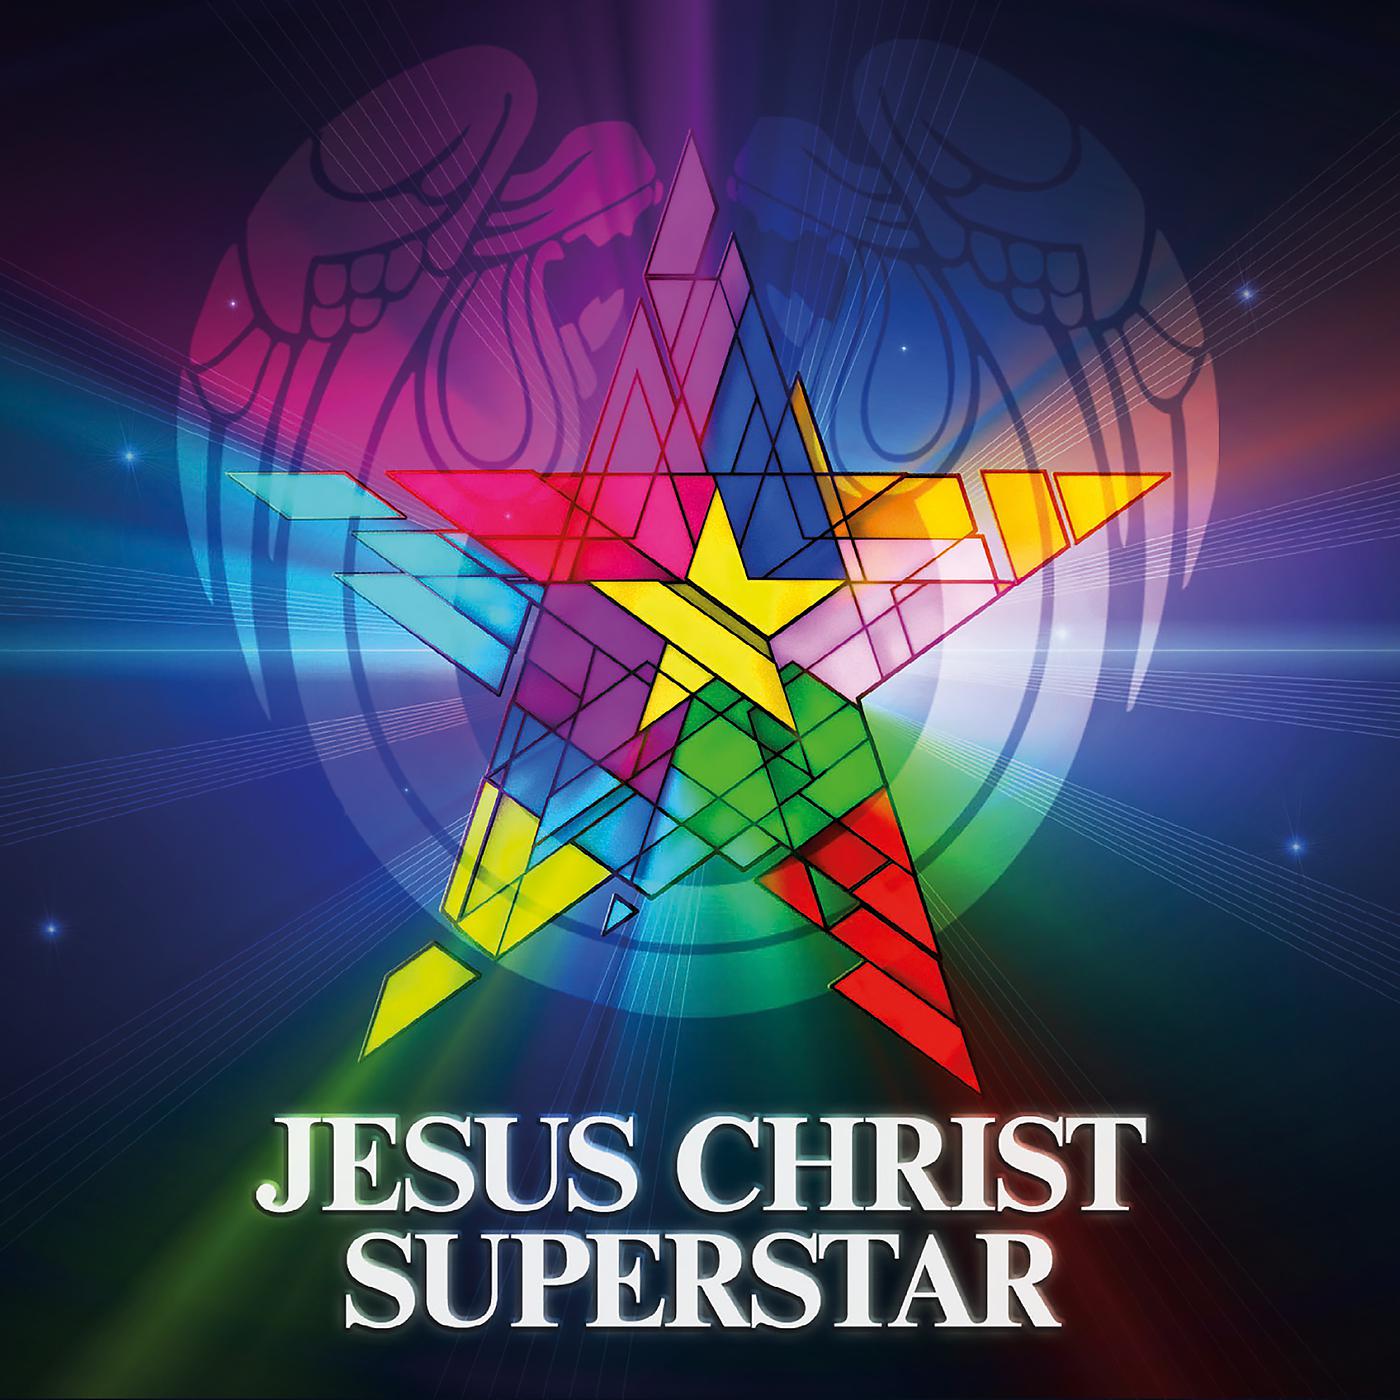 Andrew Lloyd Webber Jesus Christ Superstar 1970. Иисус Христос - суперзвезда Эндрю Ллойд Уэббер. Jesus Christ Superstar 2012. Иисус Христос суперзвезда обложка альбома.